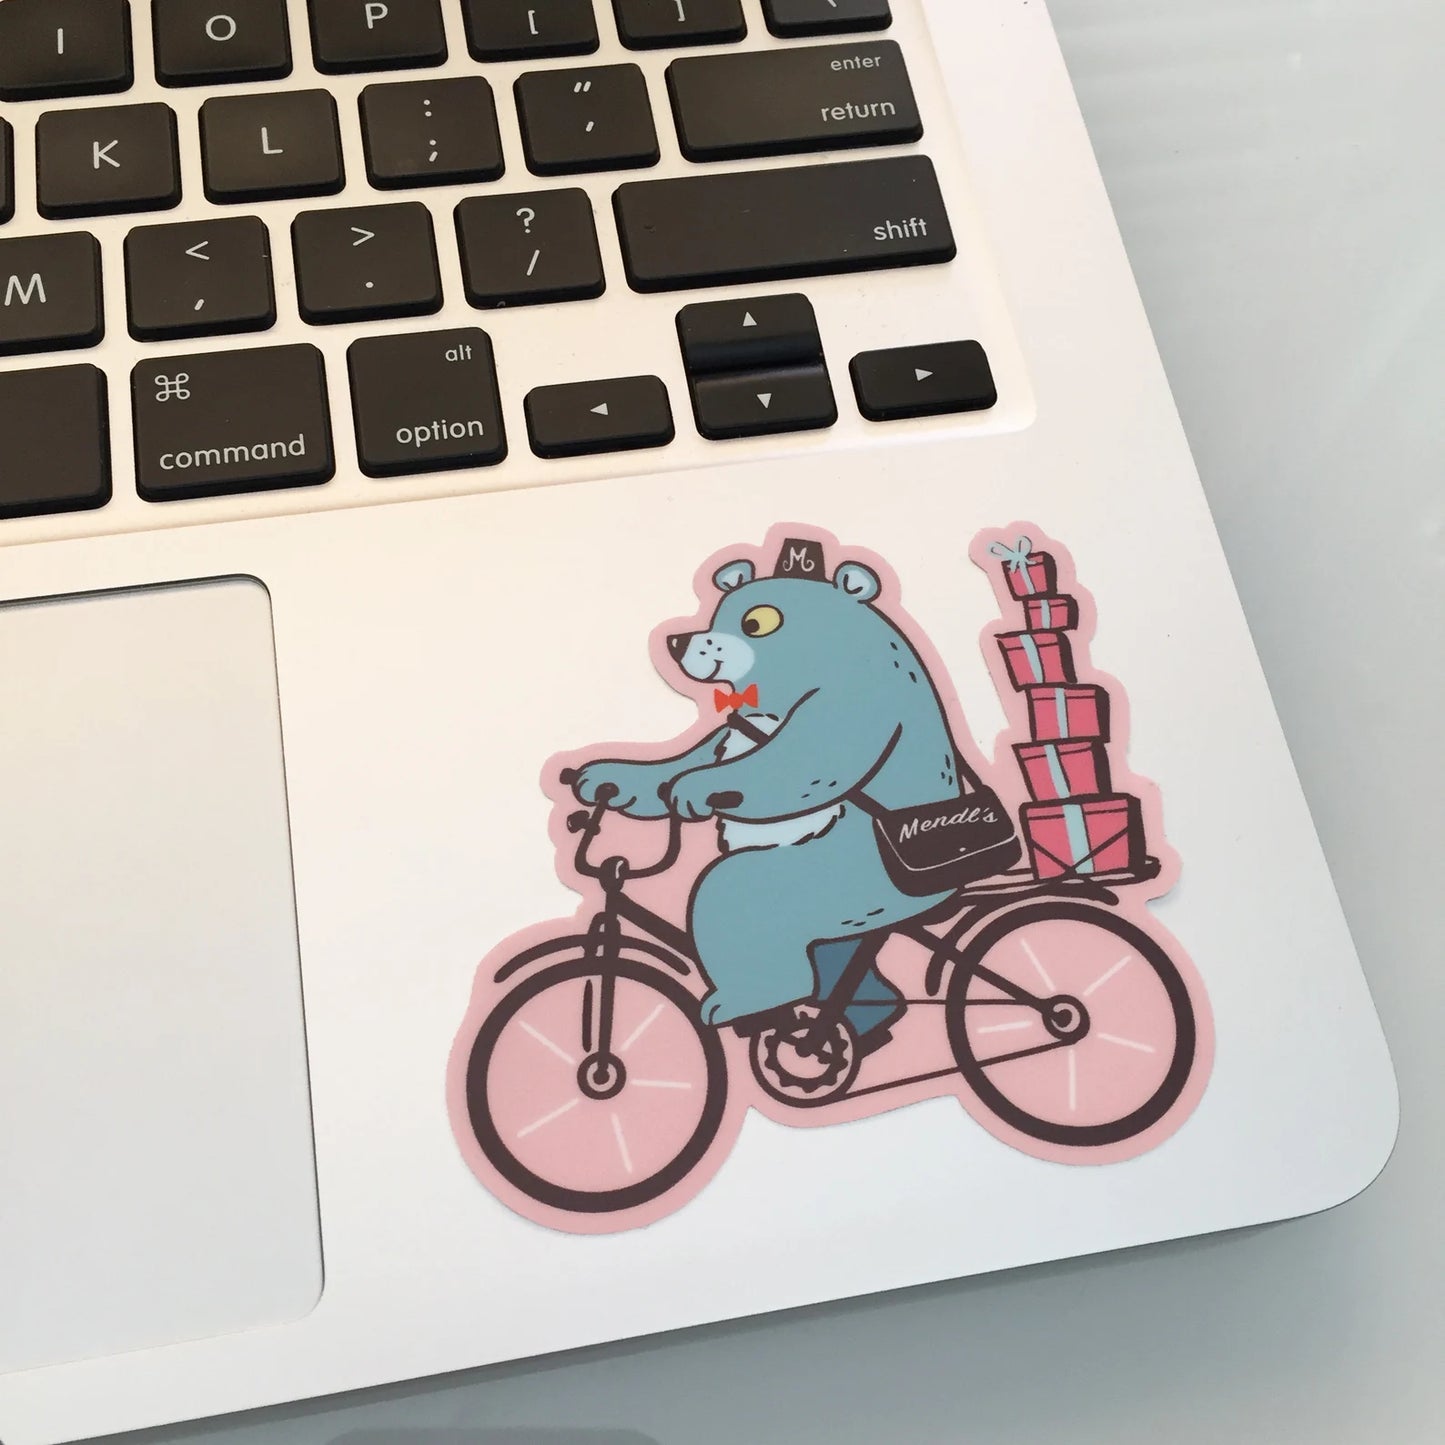 Bear on a Bike delivering Mendls Pasteries - Pastel Pink & Blue - STICKER